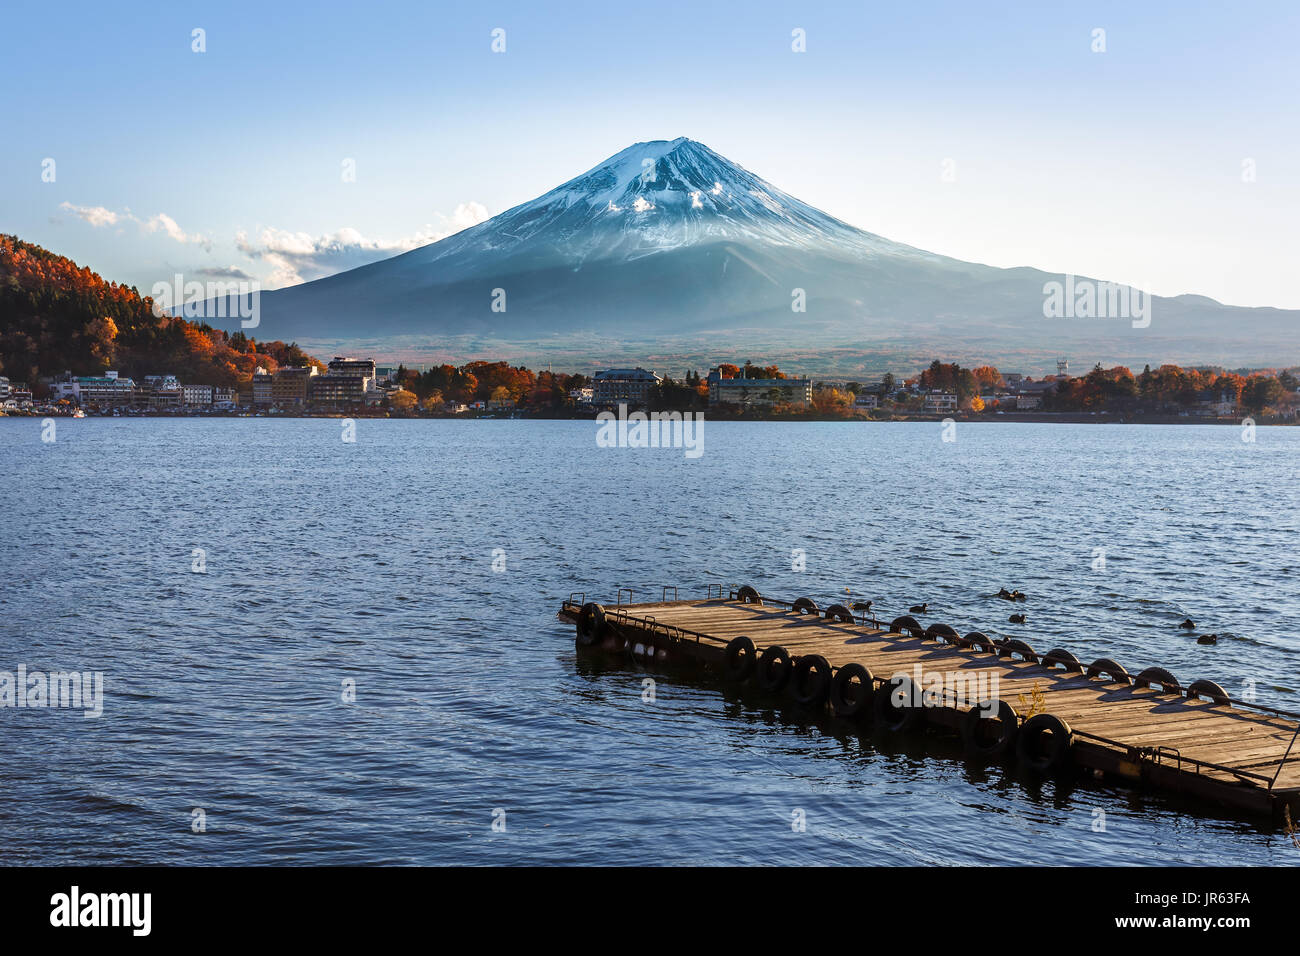 Mt. Fuji in  at Kawaguchiko lake in Japan Stock Photo